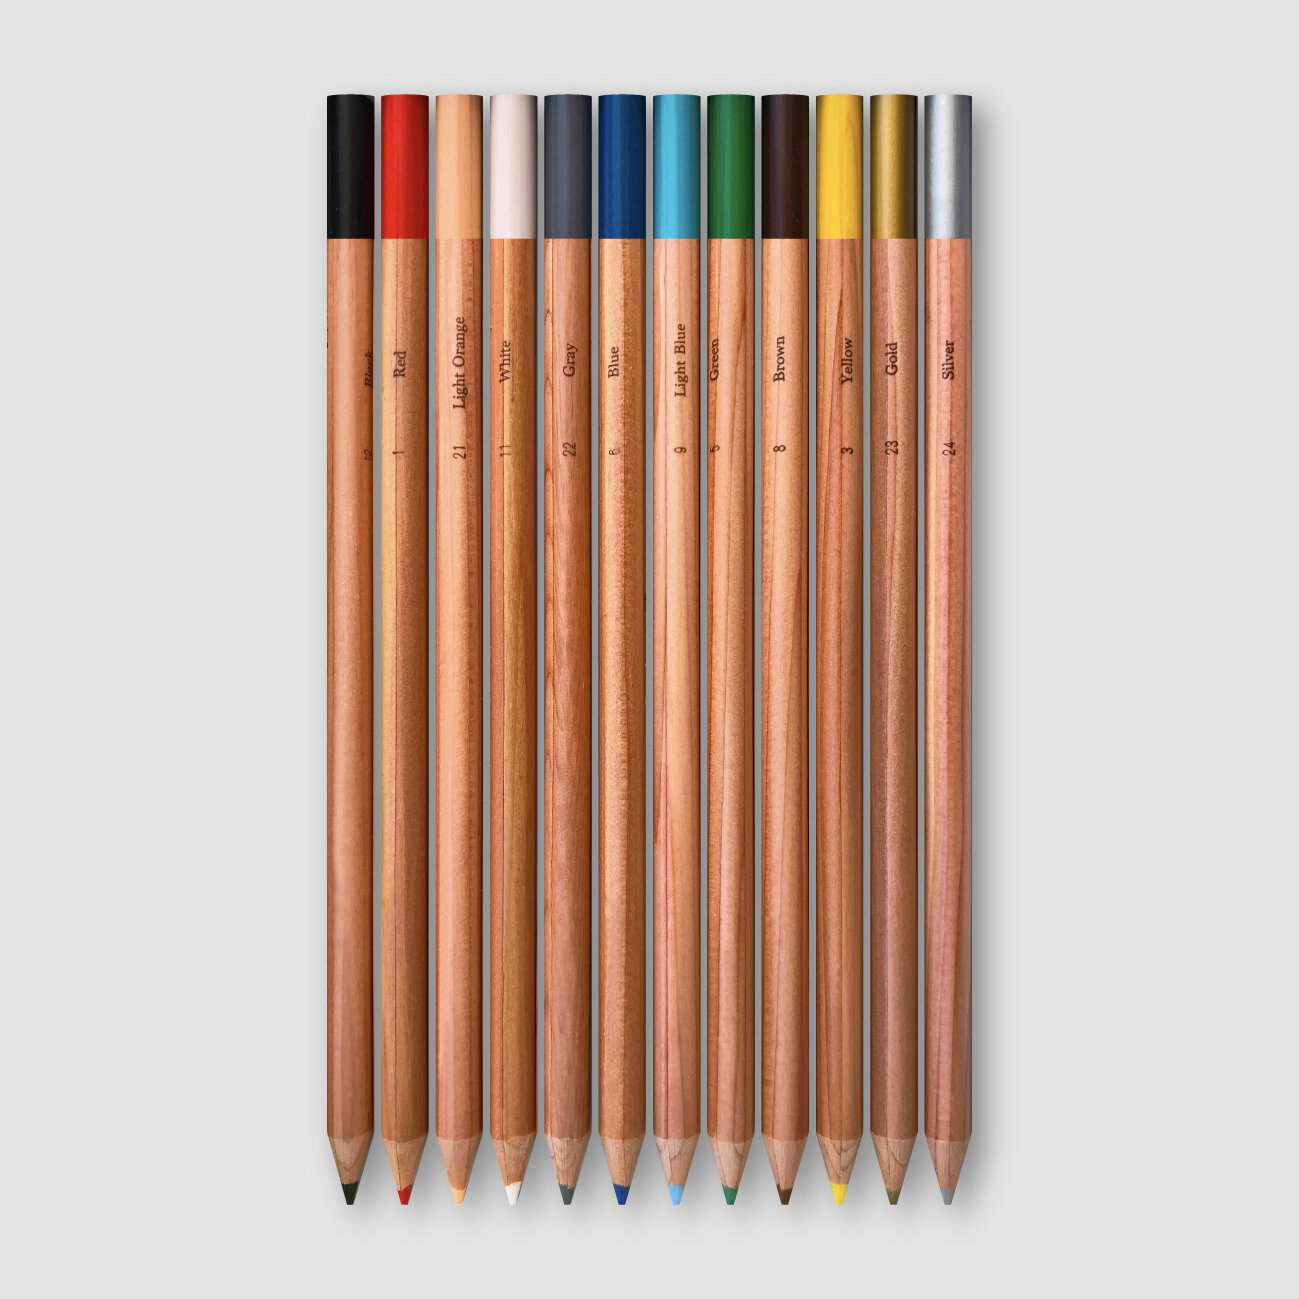 Hot Cool Tokyo — HCT x Kitaboshi The Yellow Pencil HB 6PC Set